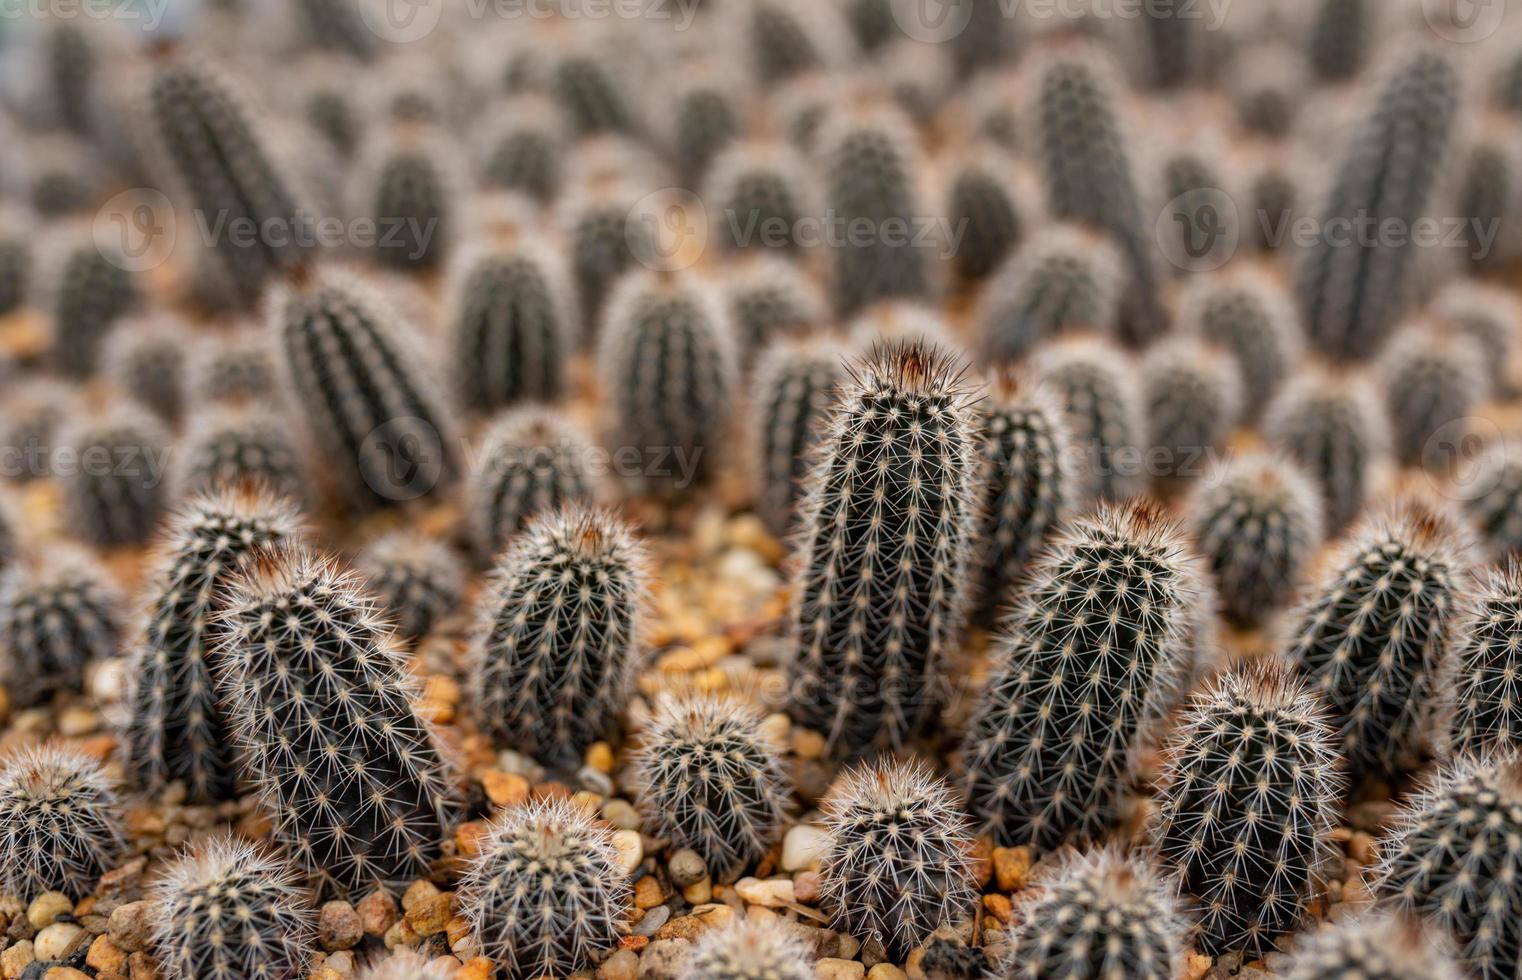 Cactus in plantation greenhouse photo